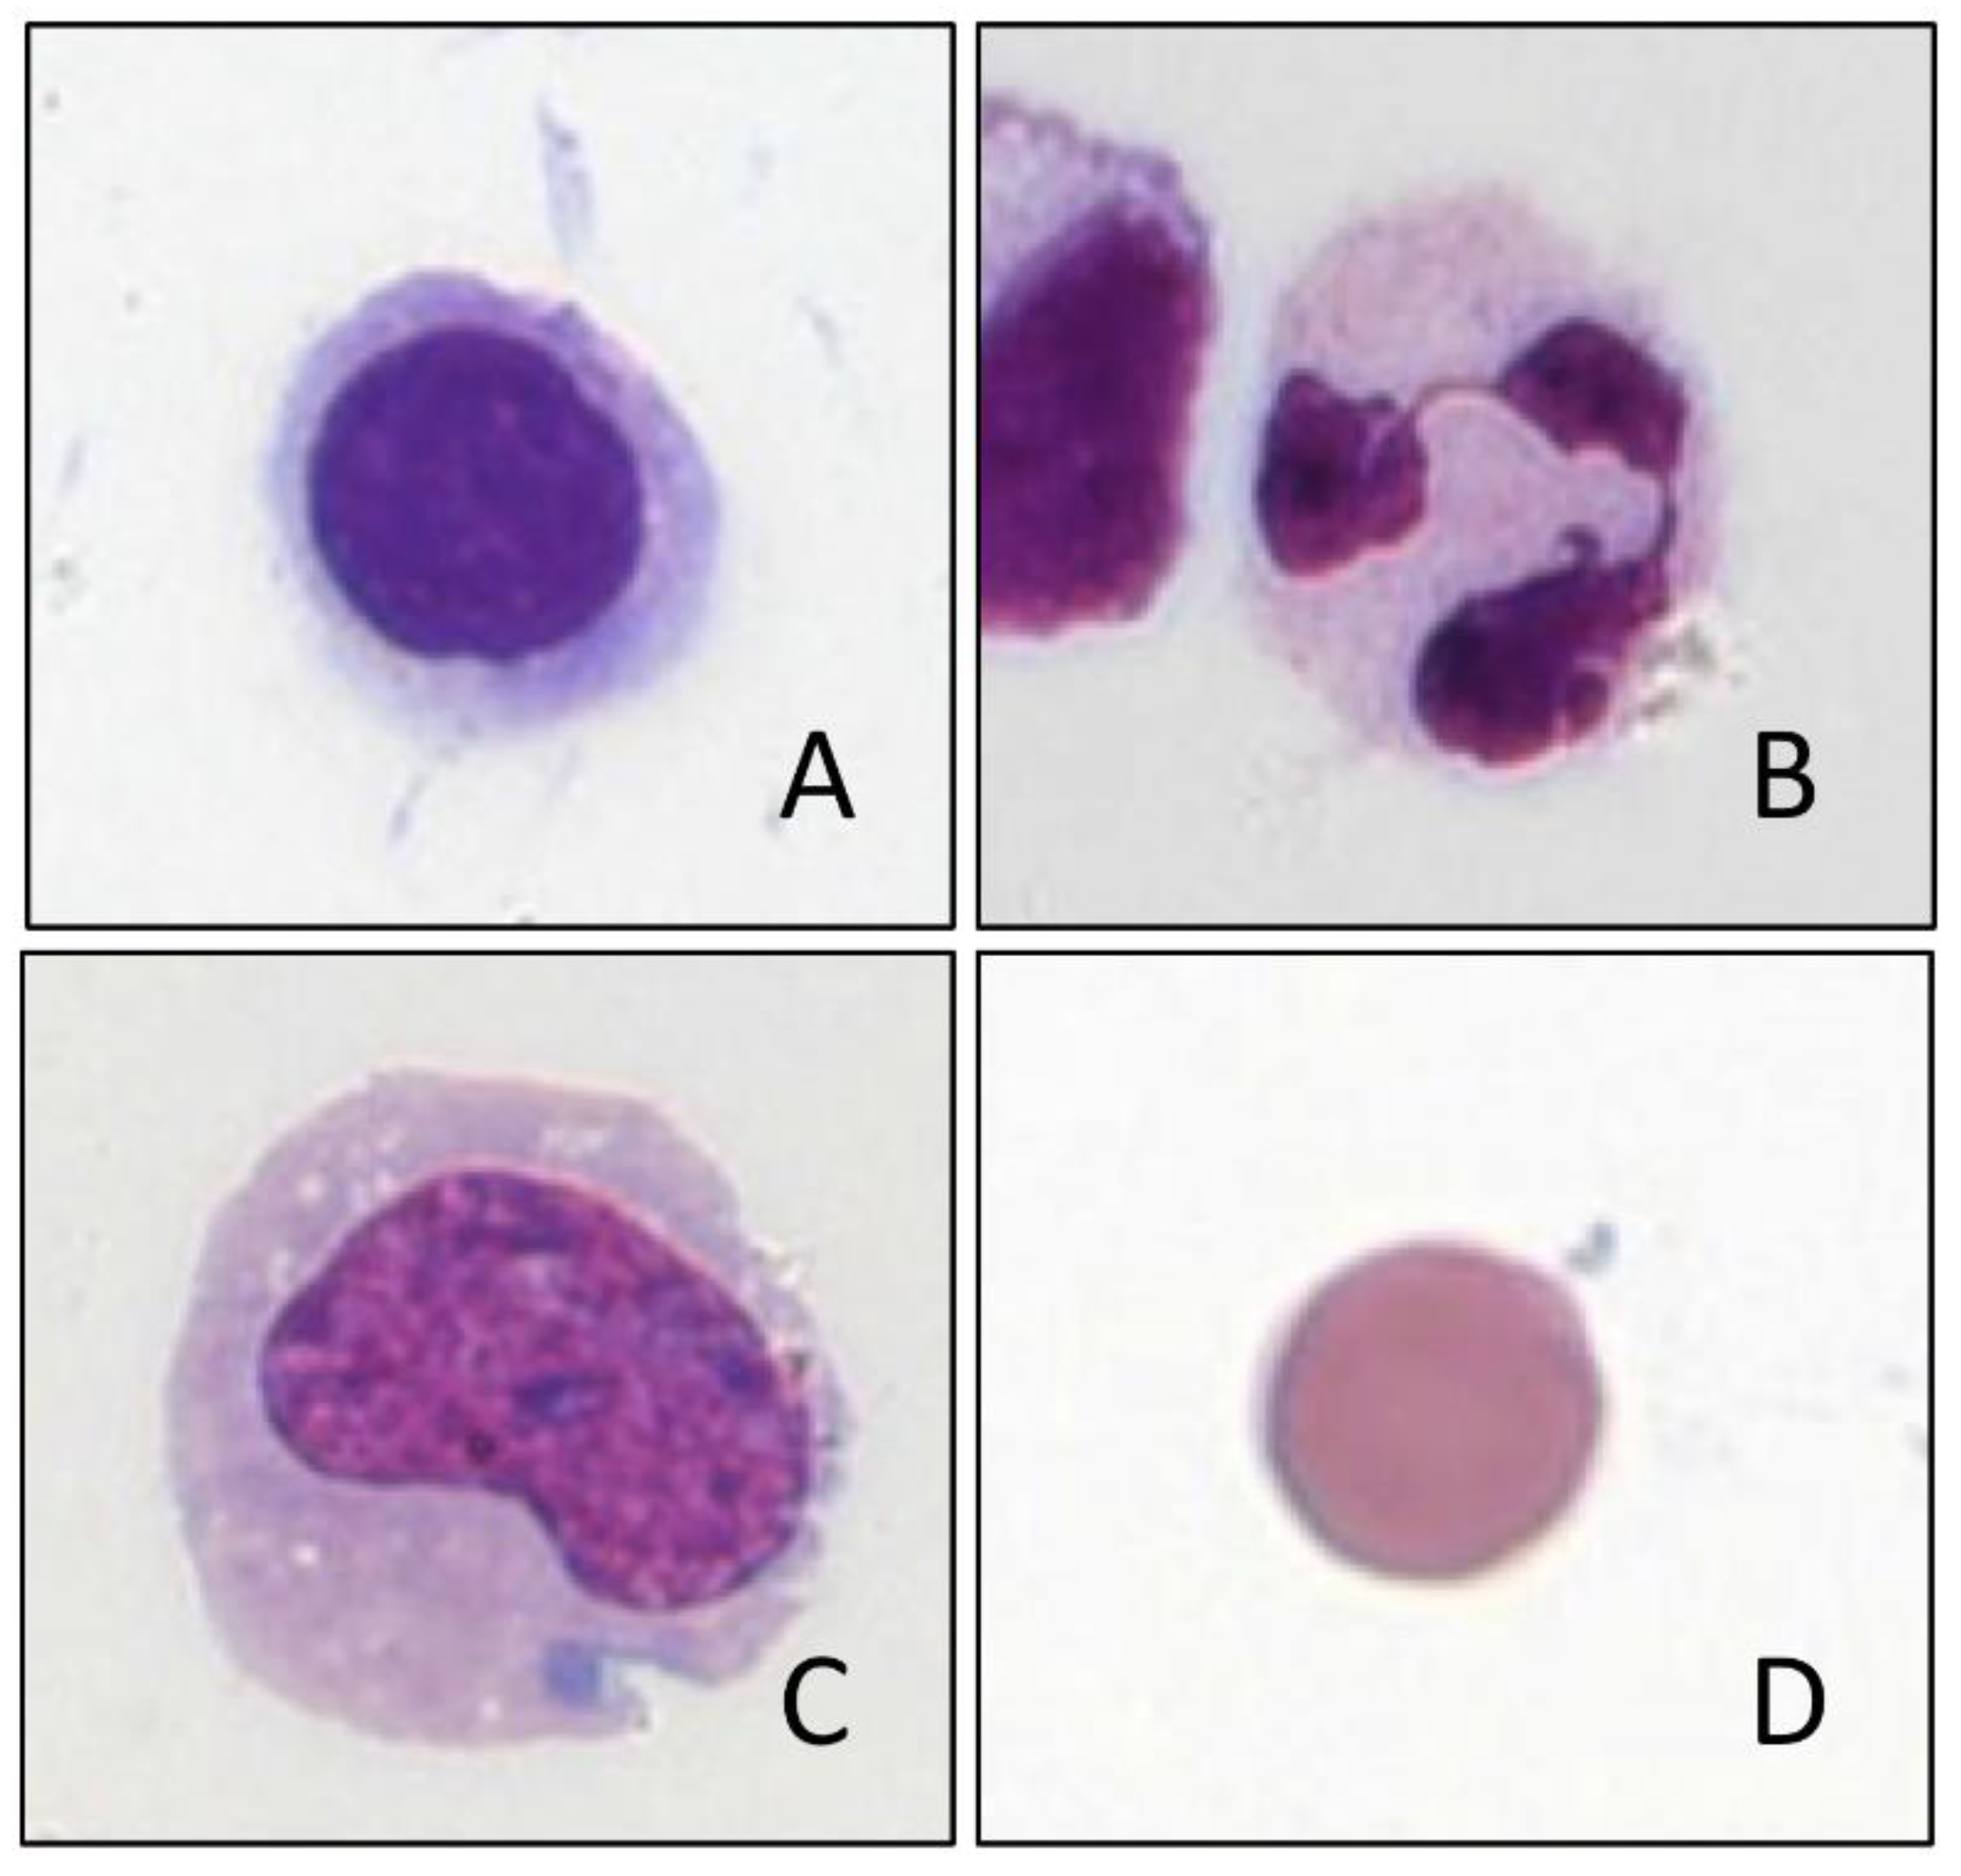 malignant cells in csf